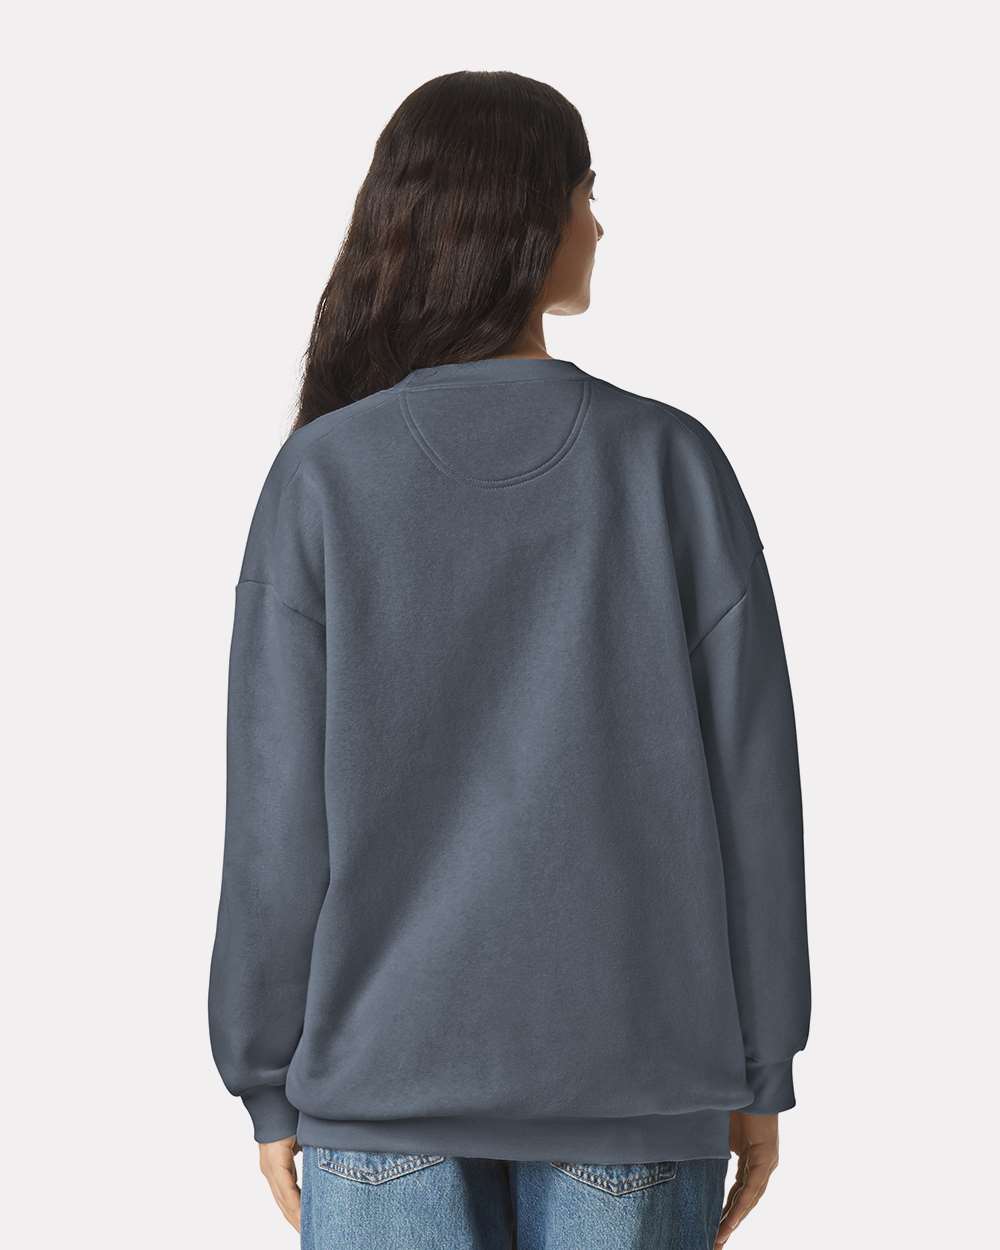 American Apparel ReFlex Fleece Crewneck Sweatshirt RF496 #colormdl_Asphalt